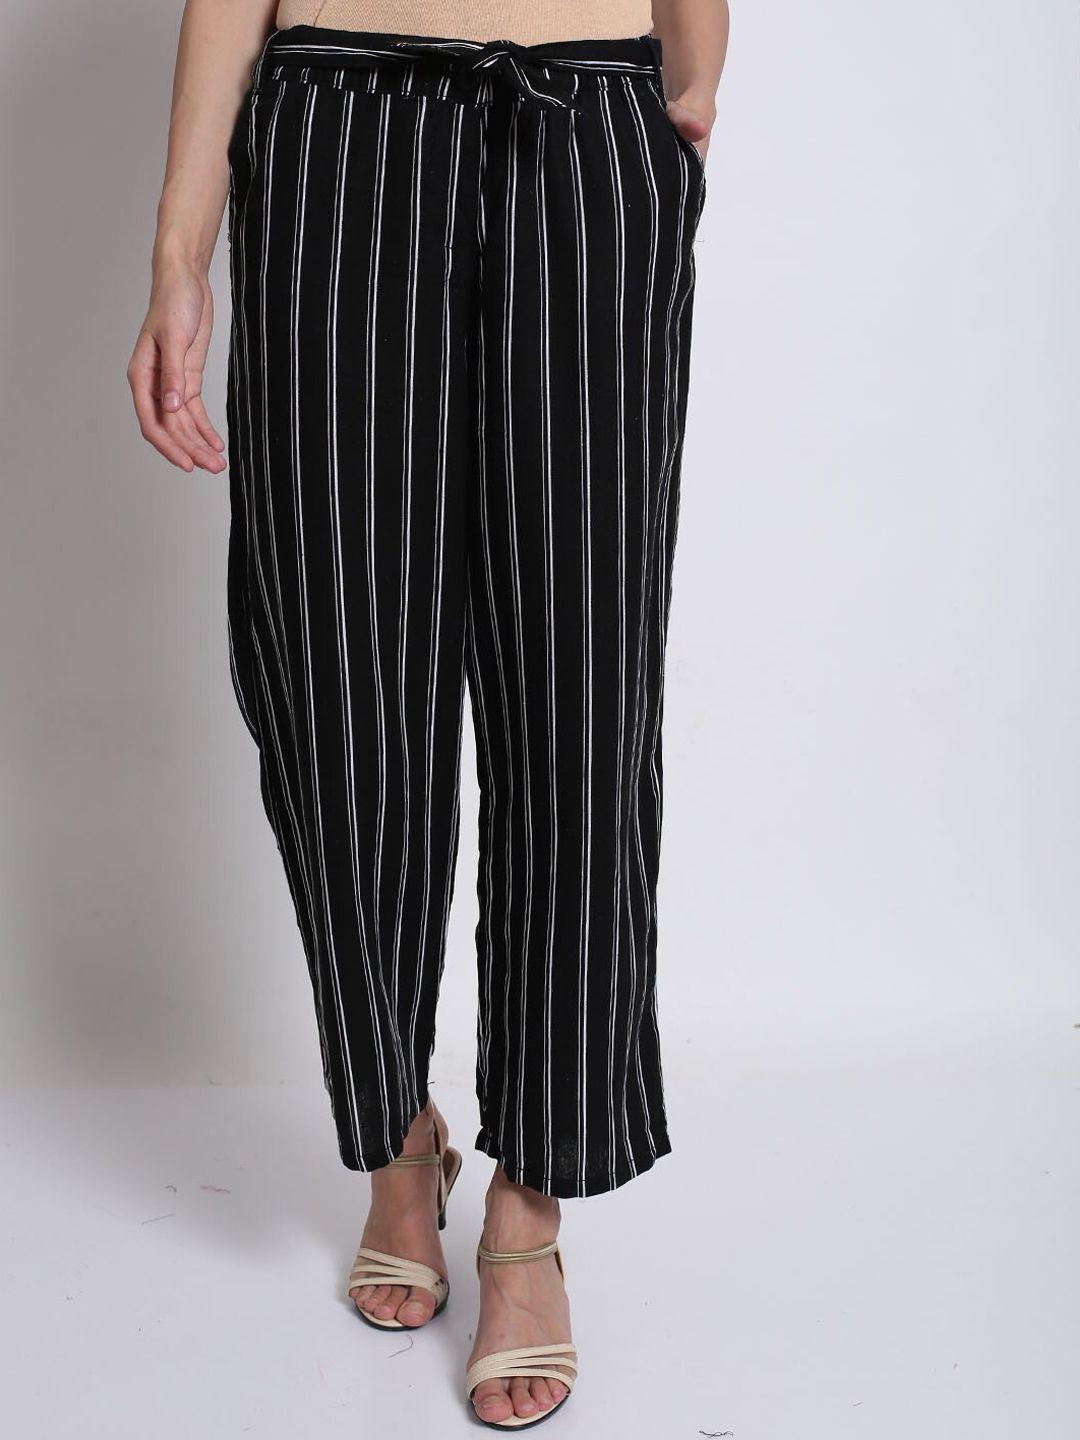 nobarr women black striped culottes trousers